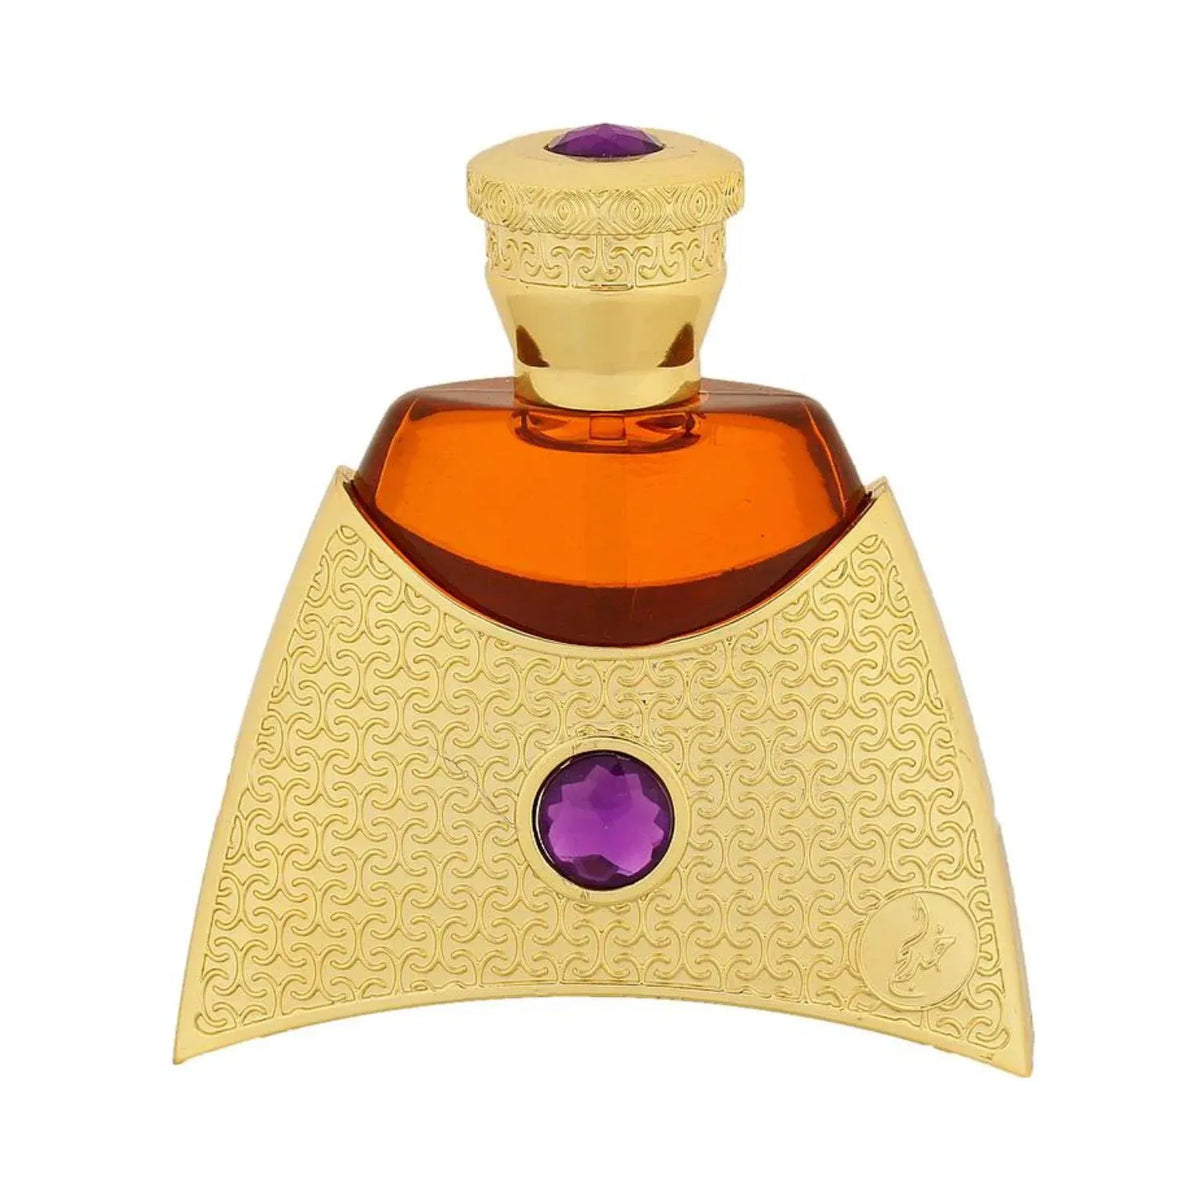 Aaliya Khadlaj Concentrated Perfume Oil 35Ml Unisex